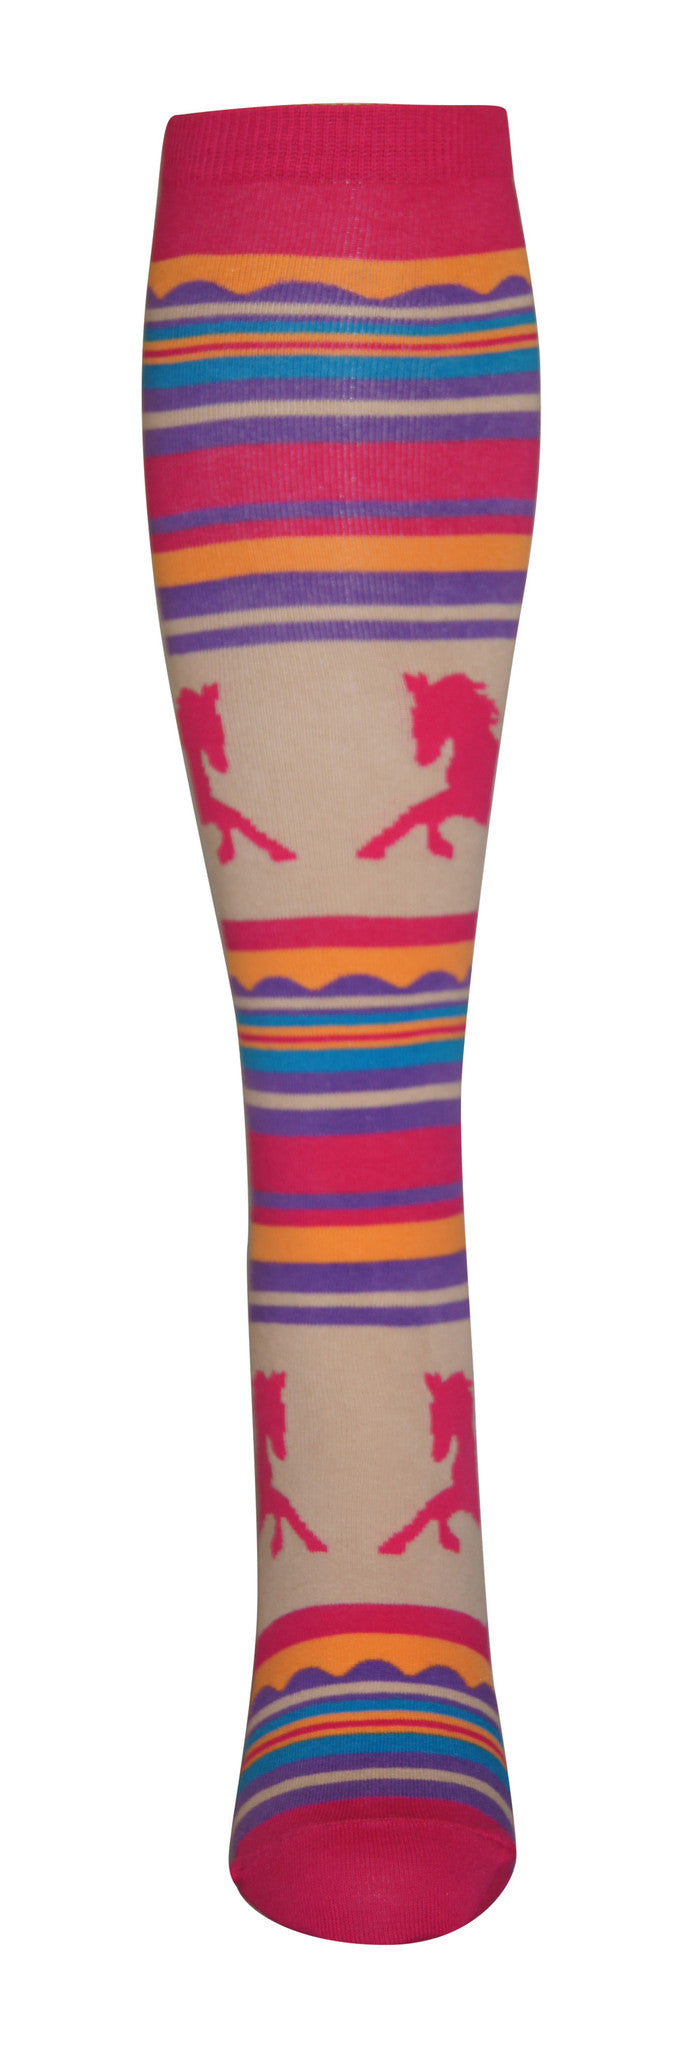 "Hot Fair Isle" cotton-rich knee sock from lucky7socks.com